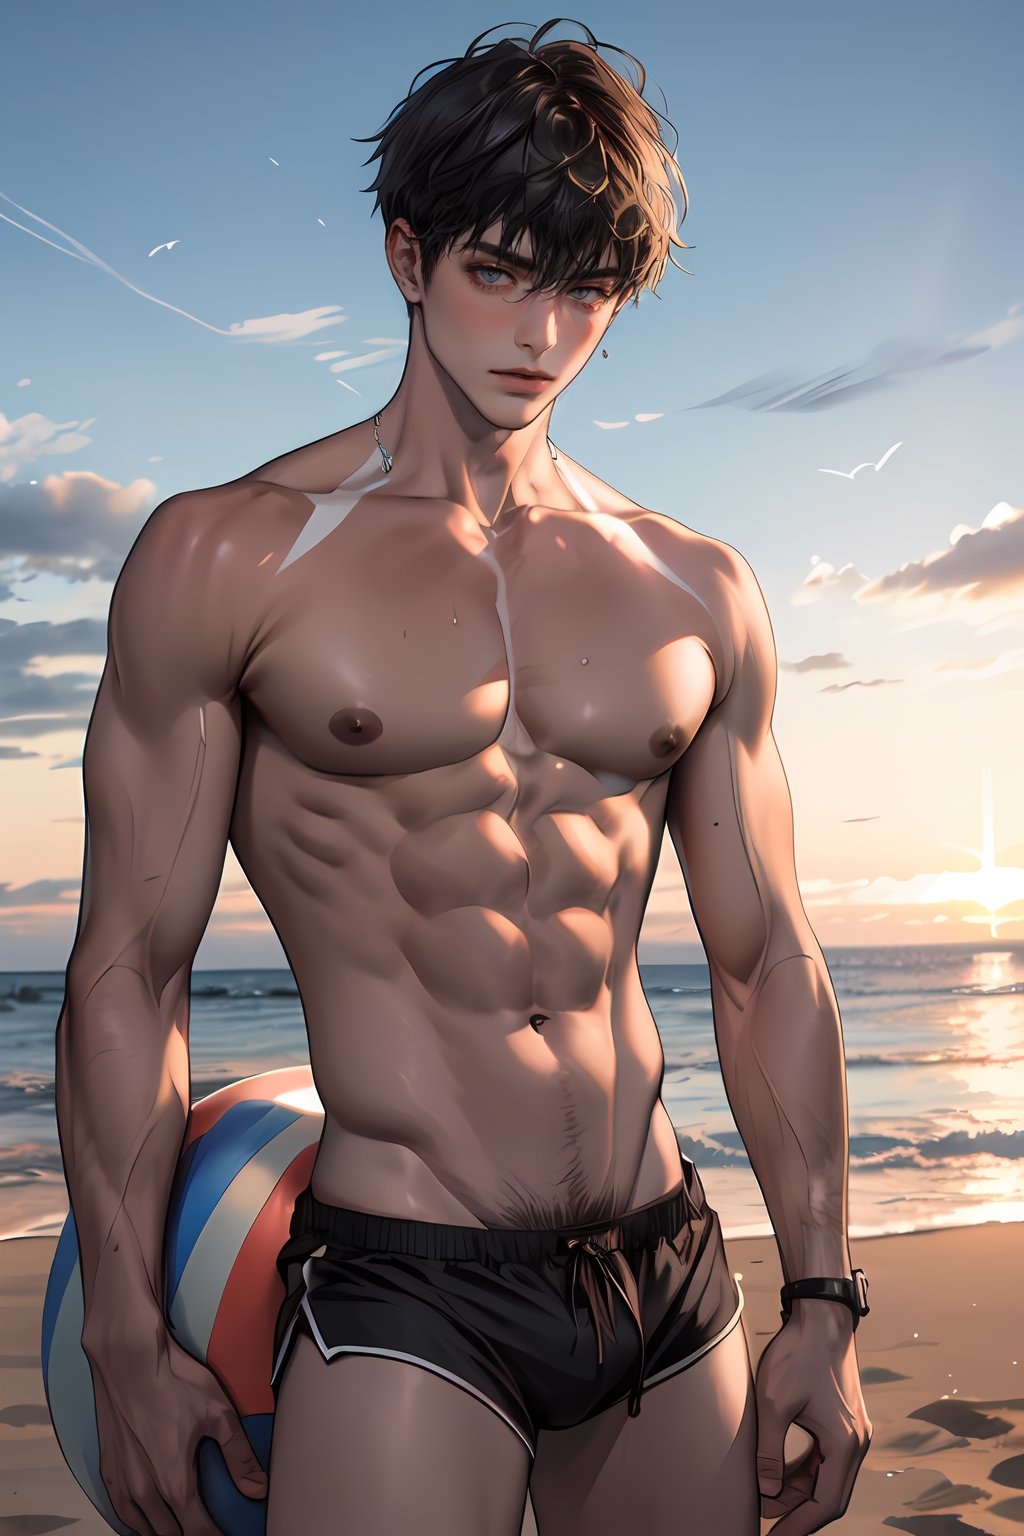  (1boy),   tan, beach, sunset, shadows, rim light , boner 

(masterpiece, best quality:1.2),Micro shorts